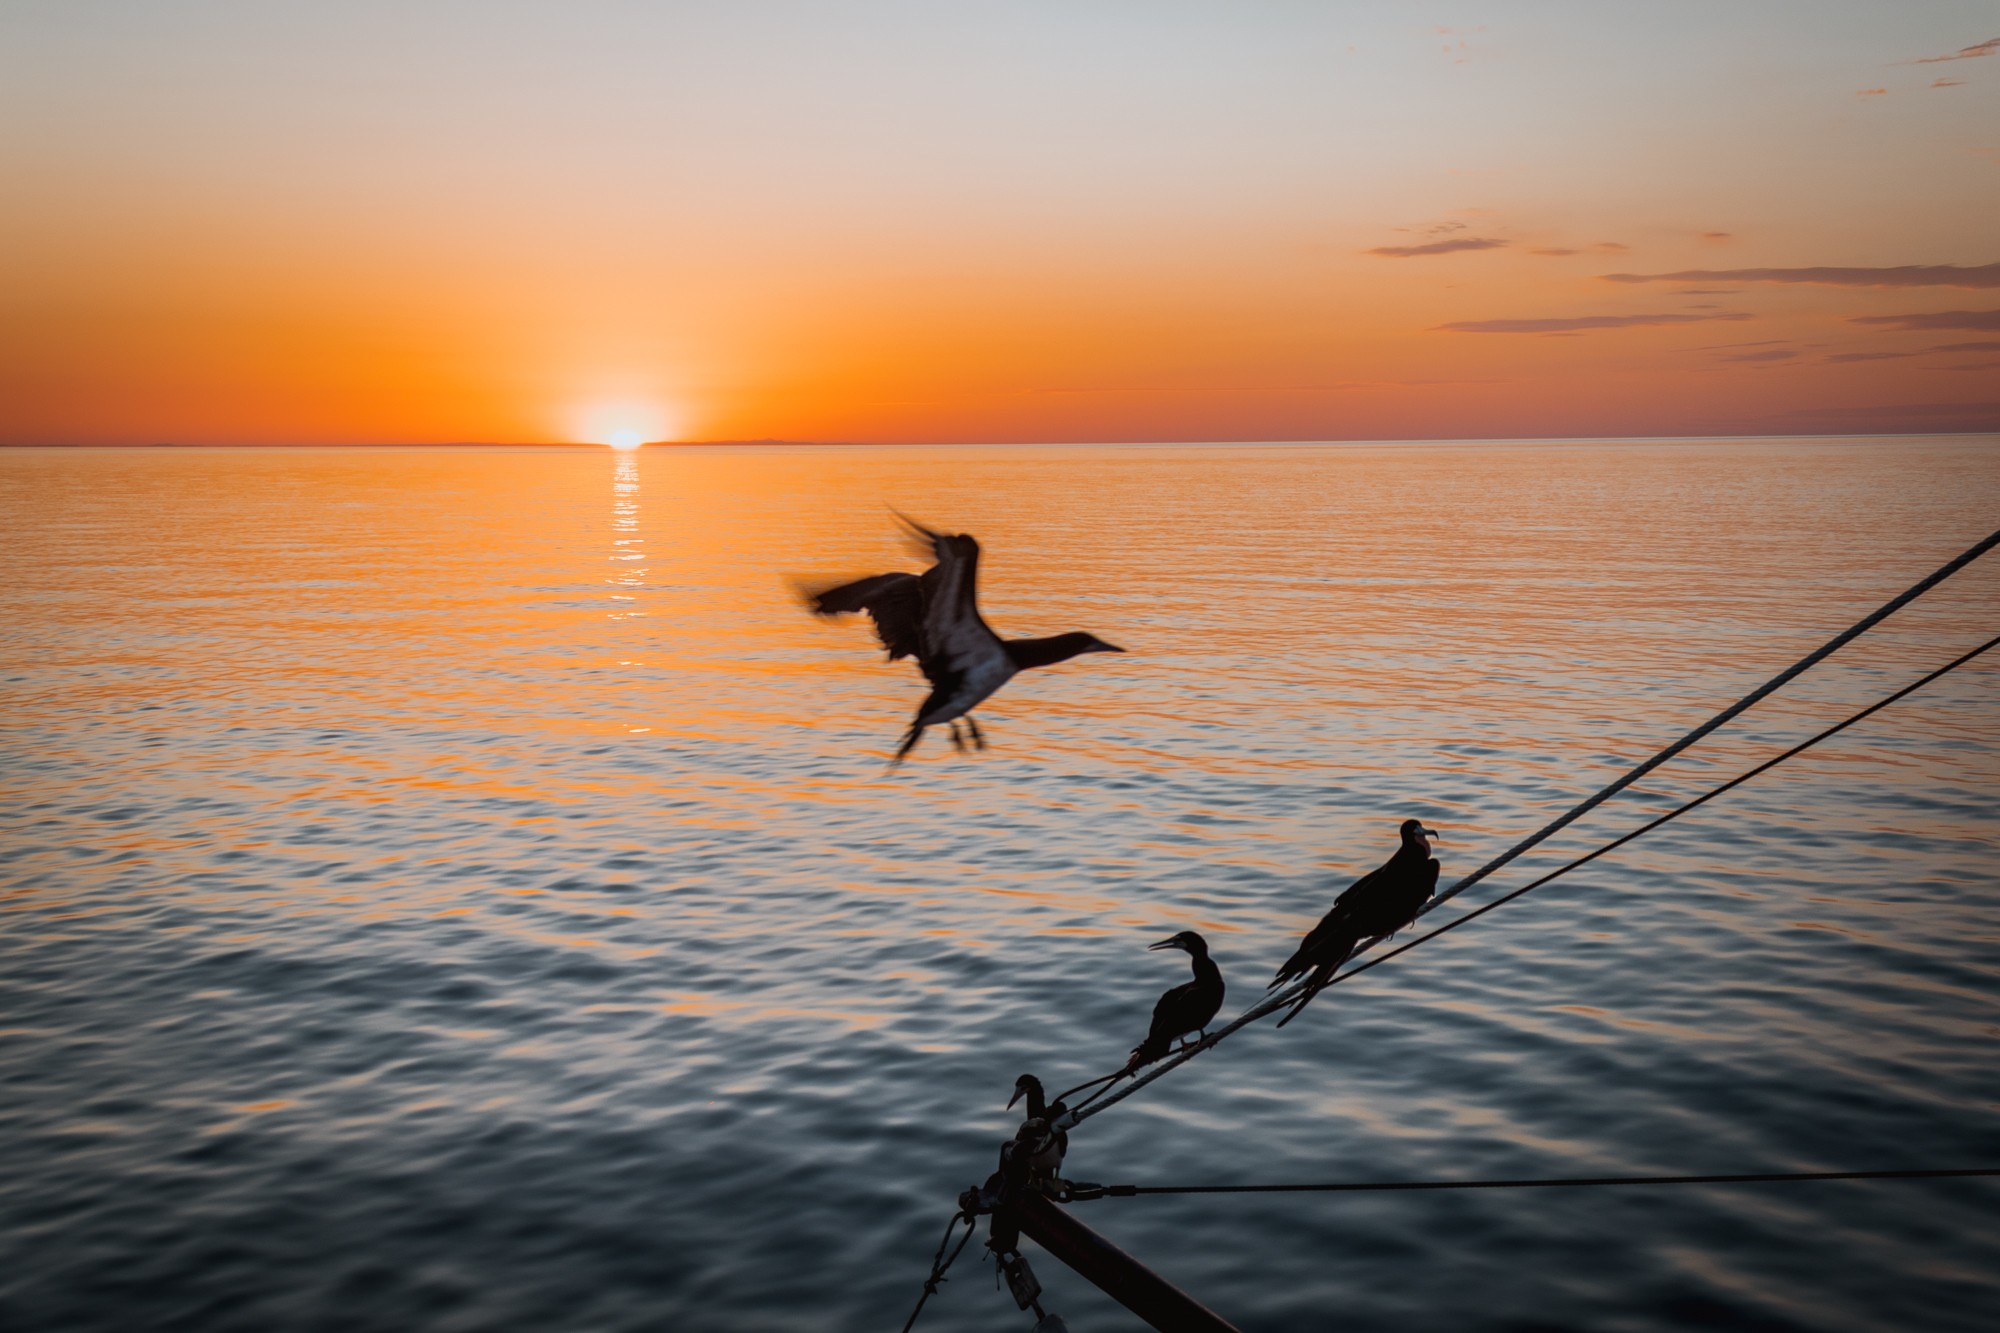 Quino El Guardian diving lieveaboard sea of cortez sunset